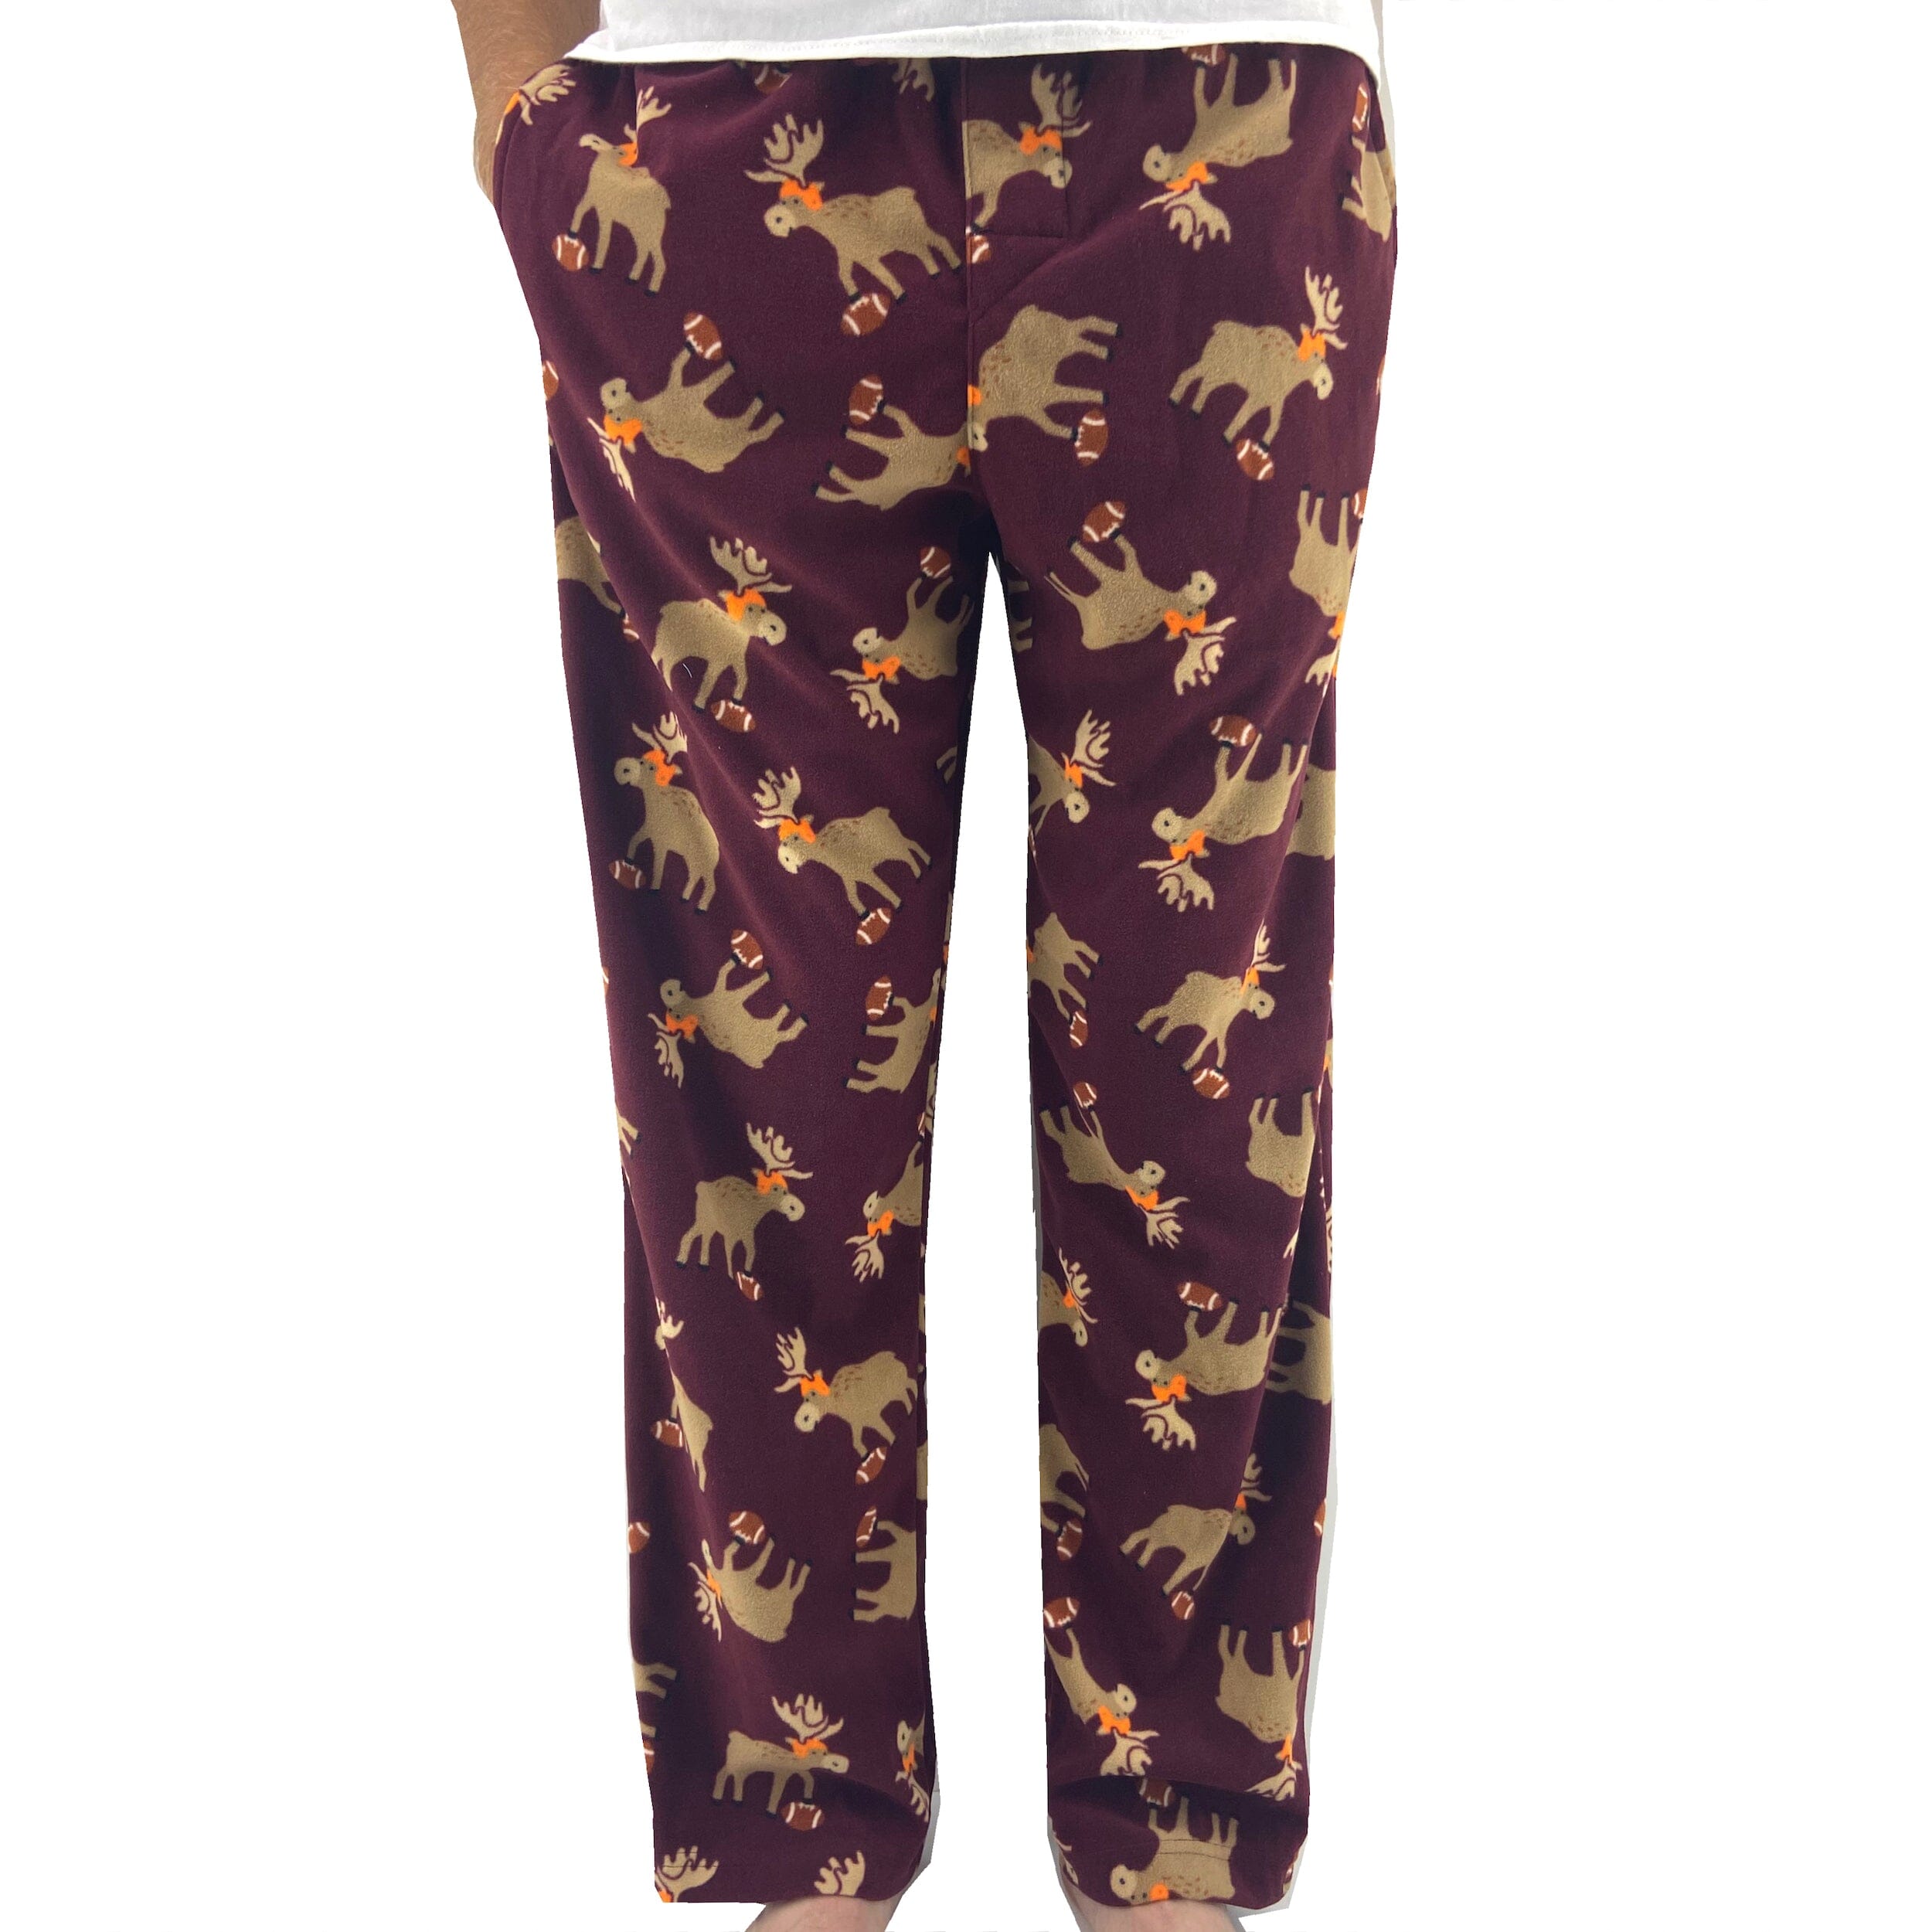 Outdoorsy Moose Pajama Bottoms For Men. Buy Mens Moose Lounge Pants